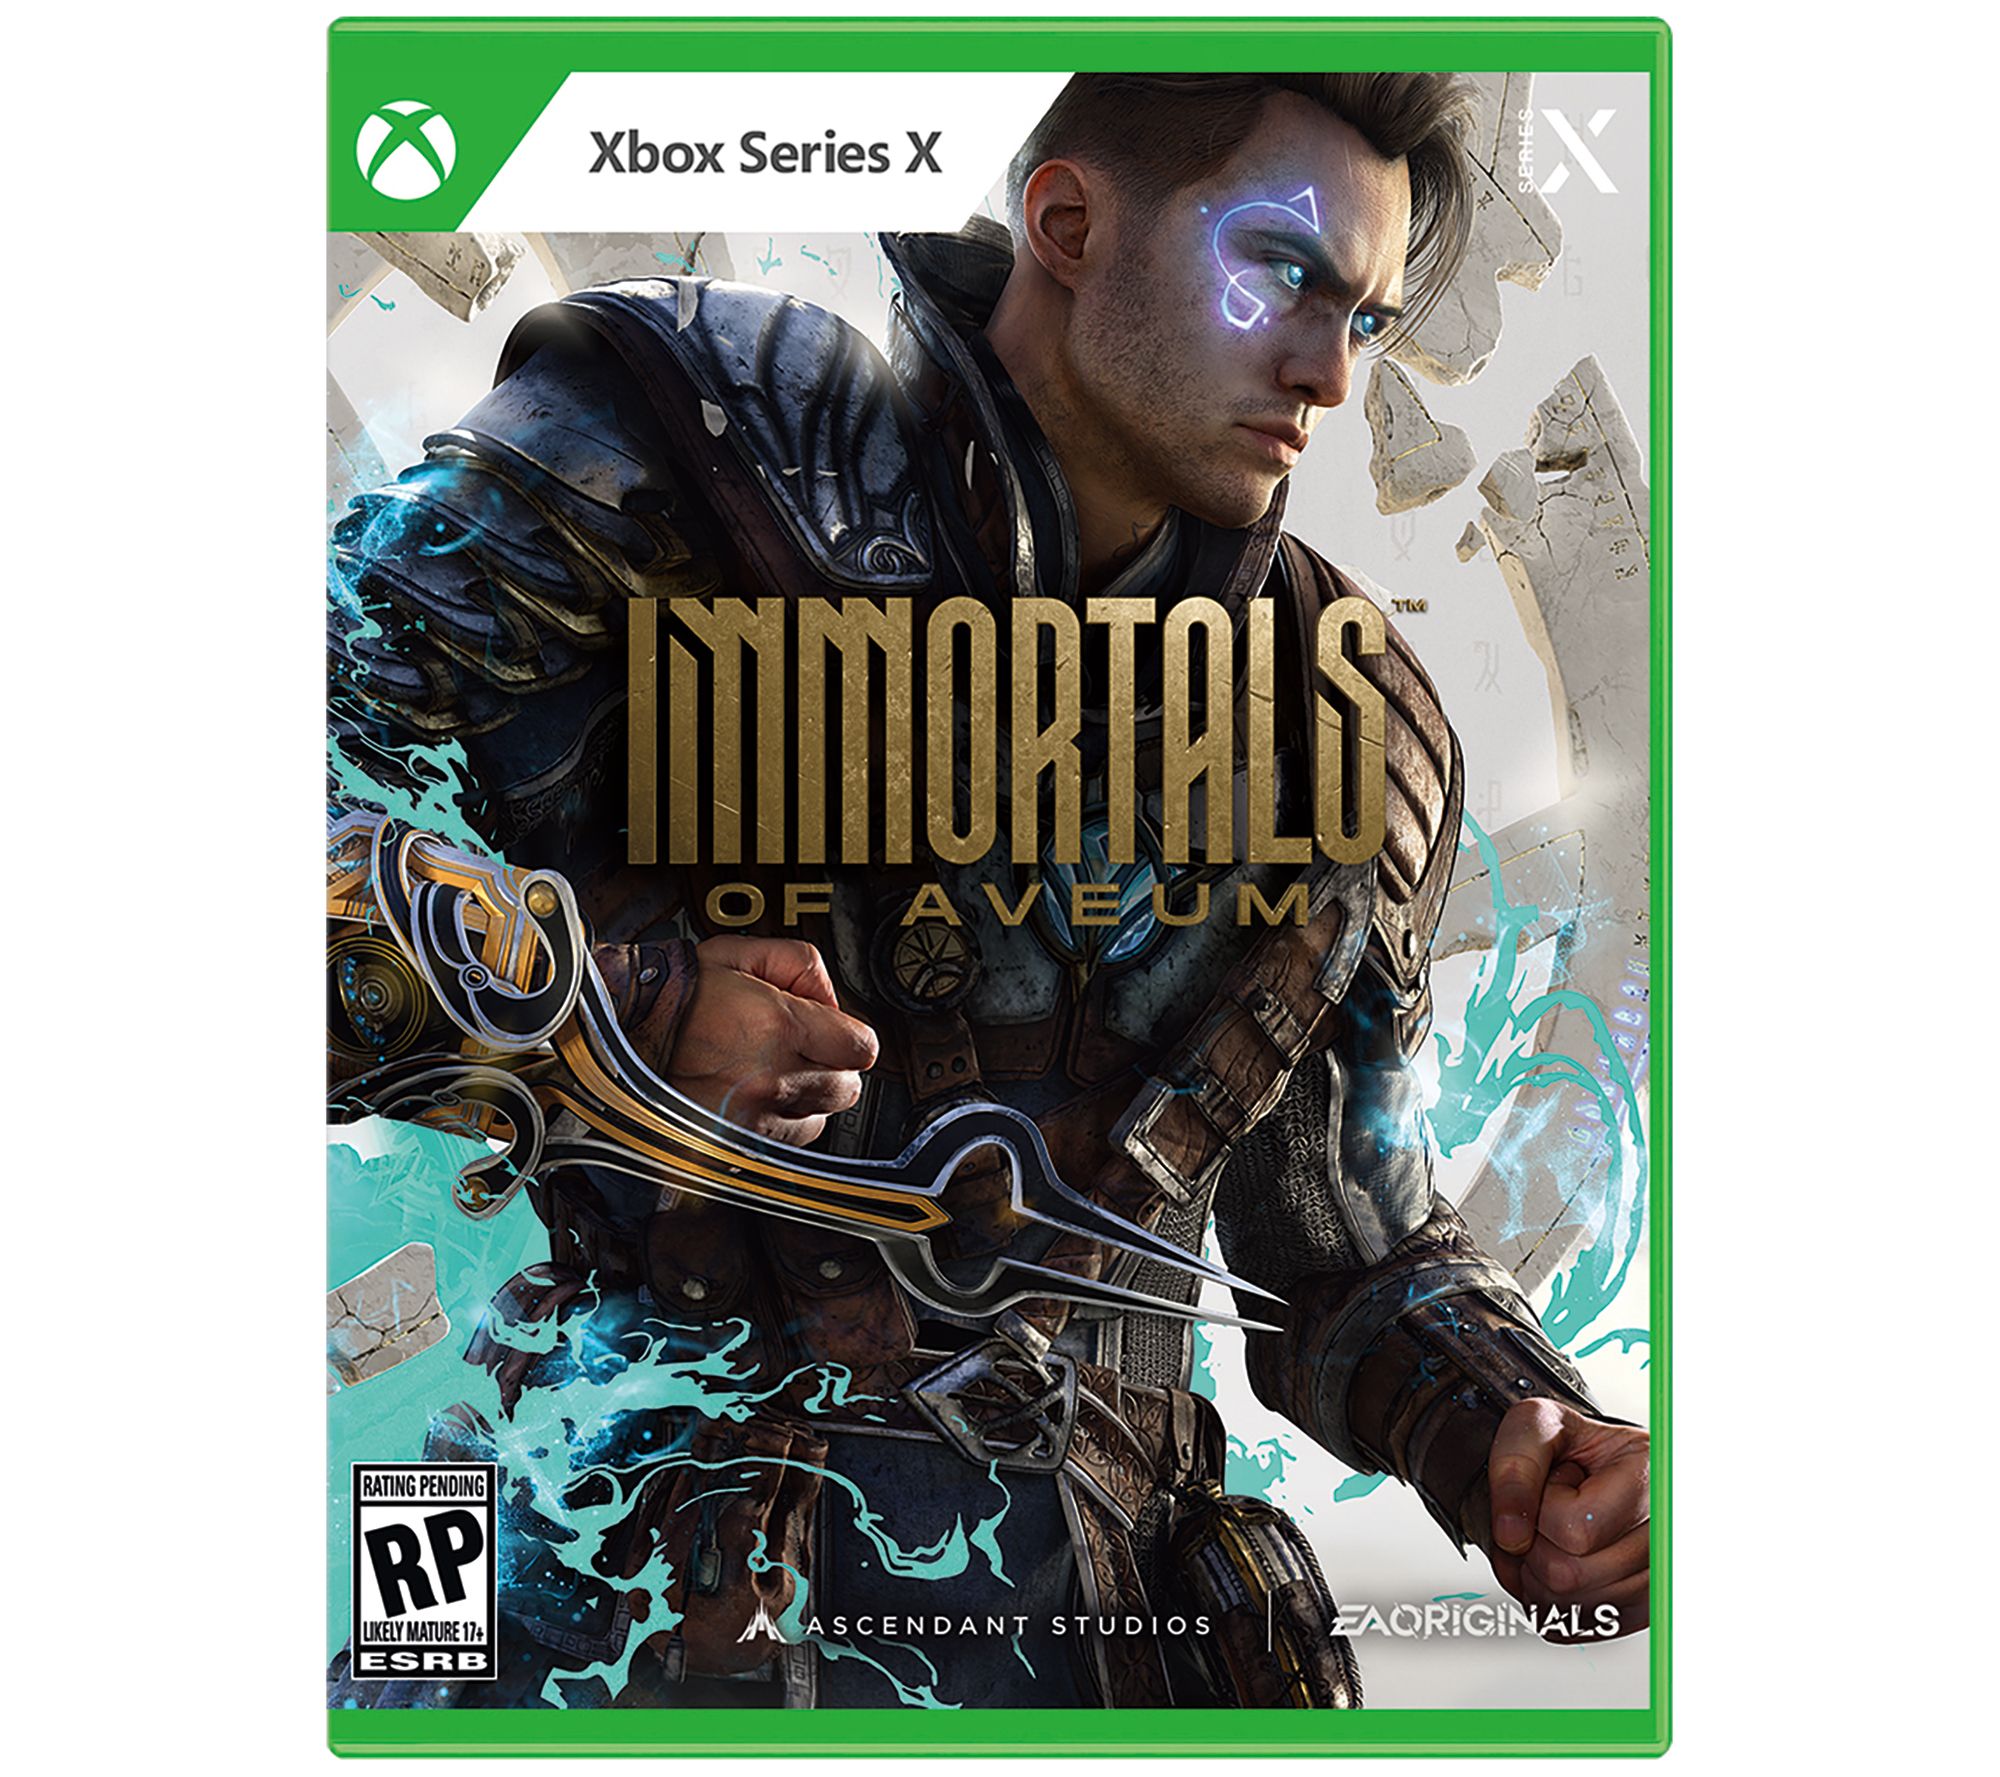 Capa Xbox One Controle Case - Mortal Kombat X - Pop Arte Skins